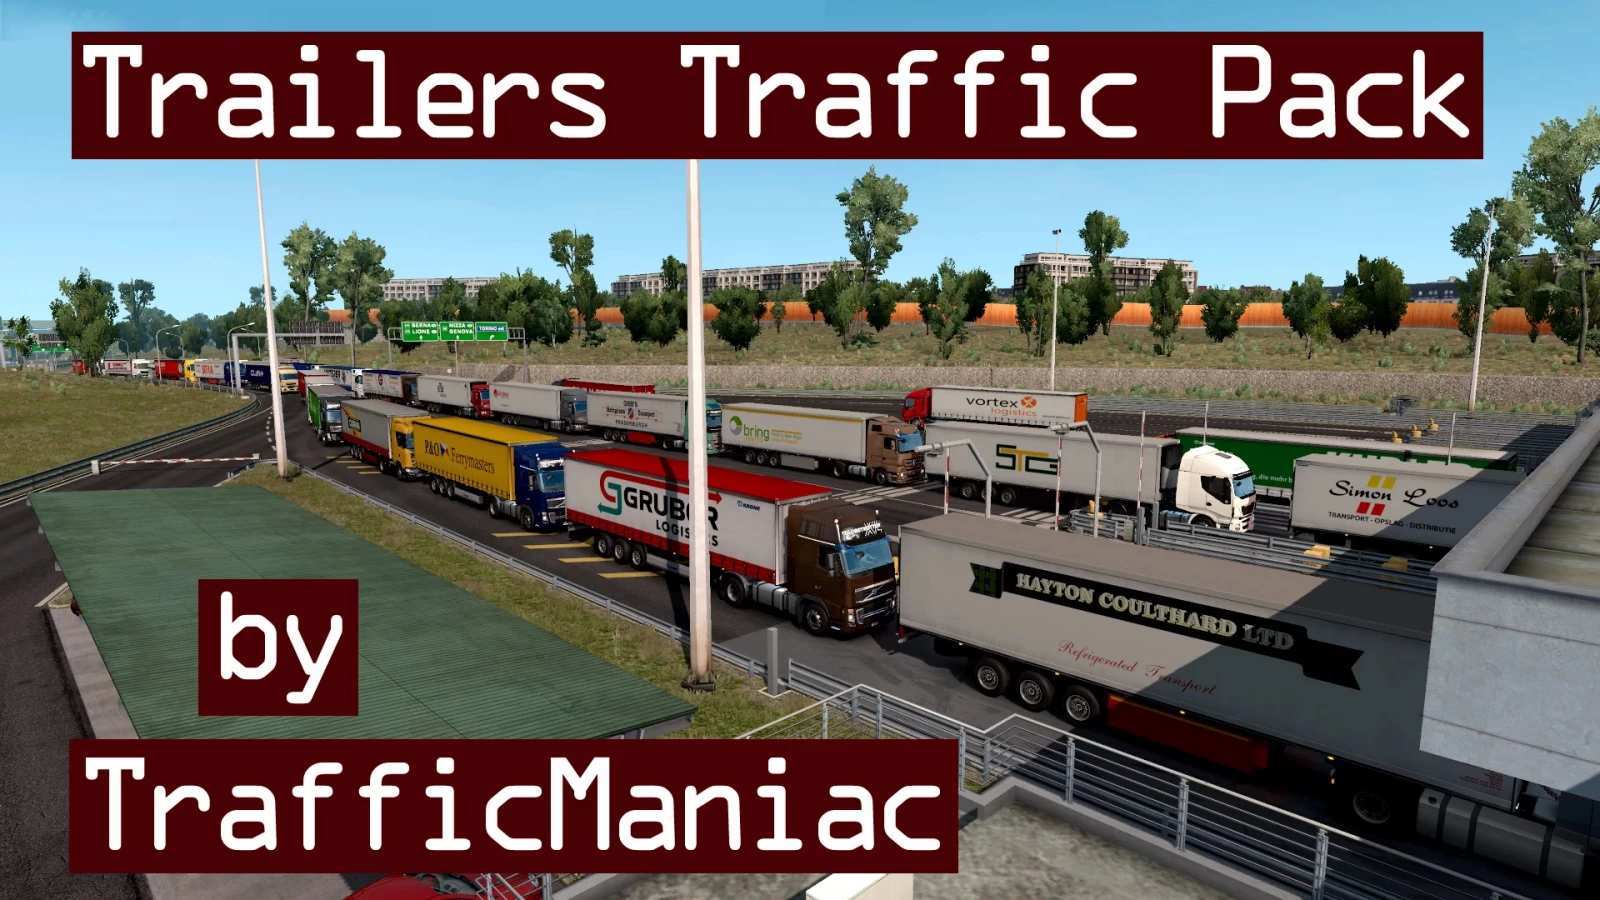 Trailers Traffic Pack v6.5 by TrafficManiac (1.45.x) for ATS